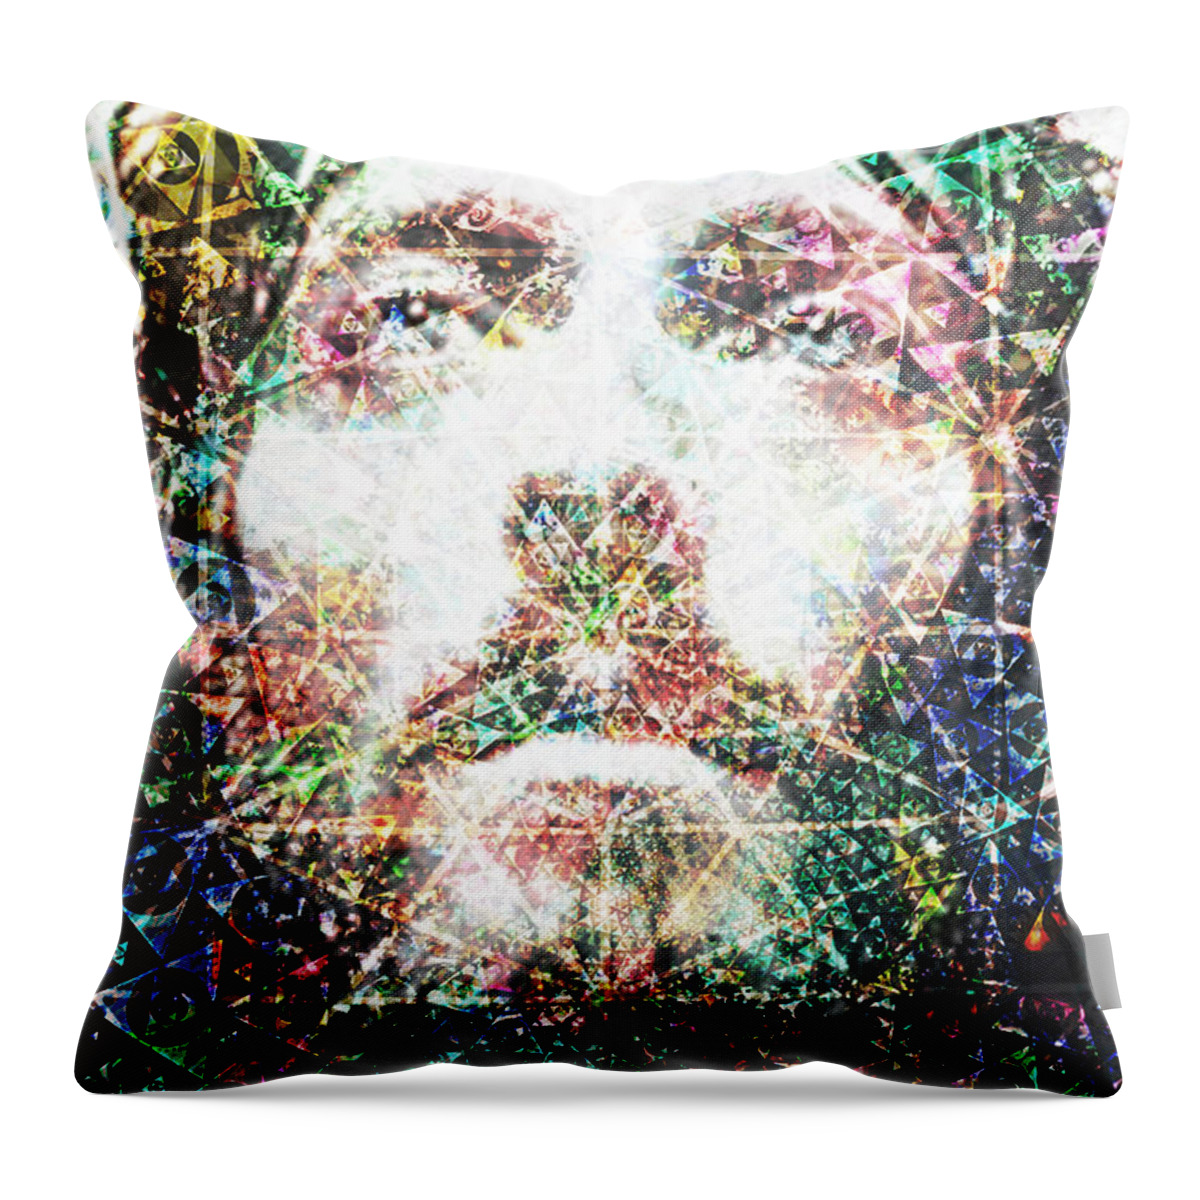 Jesus Throw Pillow featuring the digital art Cosmic Christ by J U A N - O A X A C A